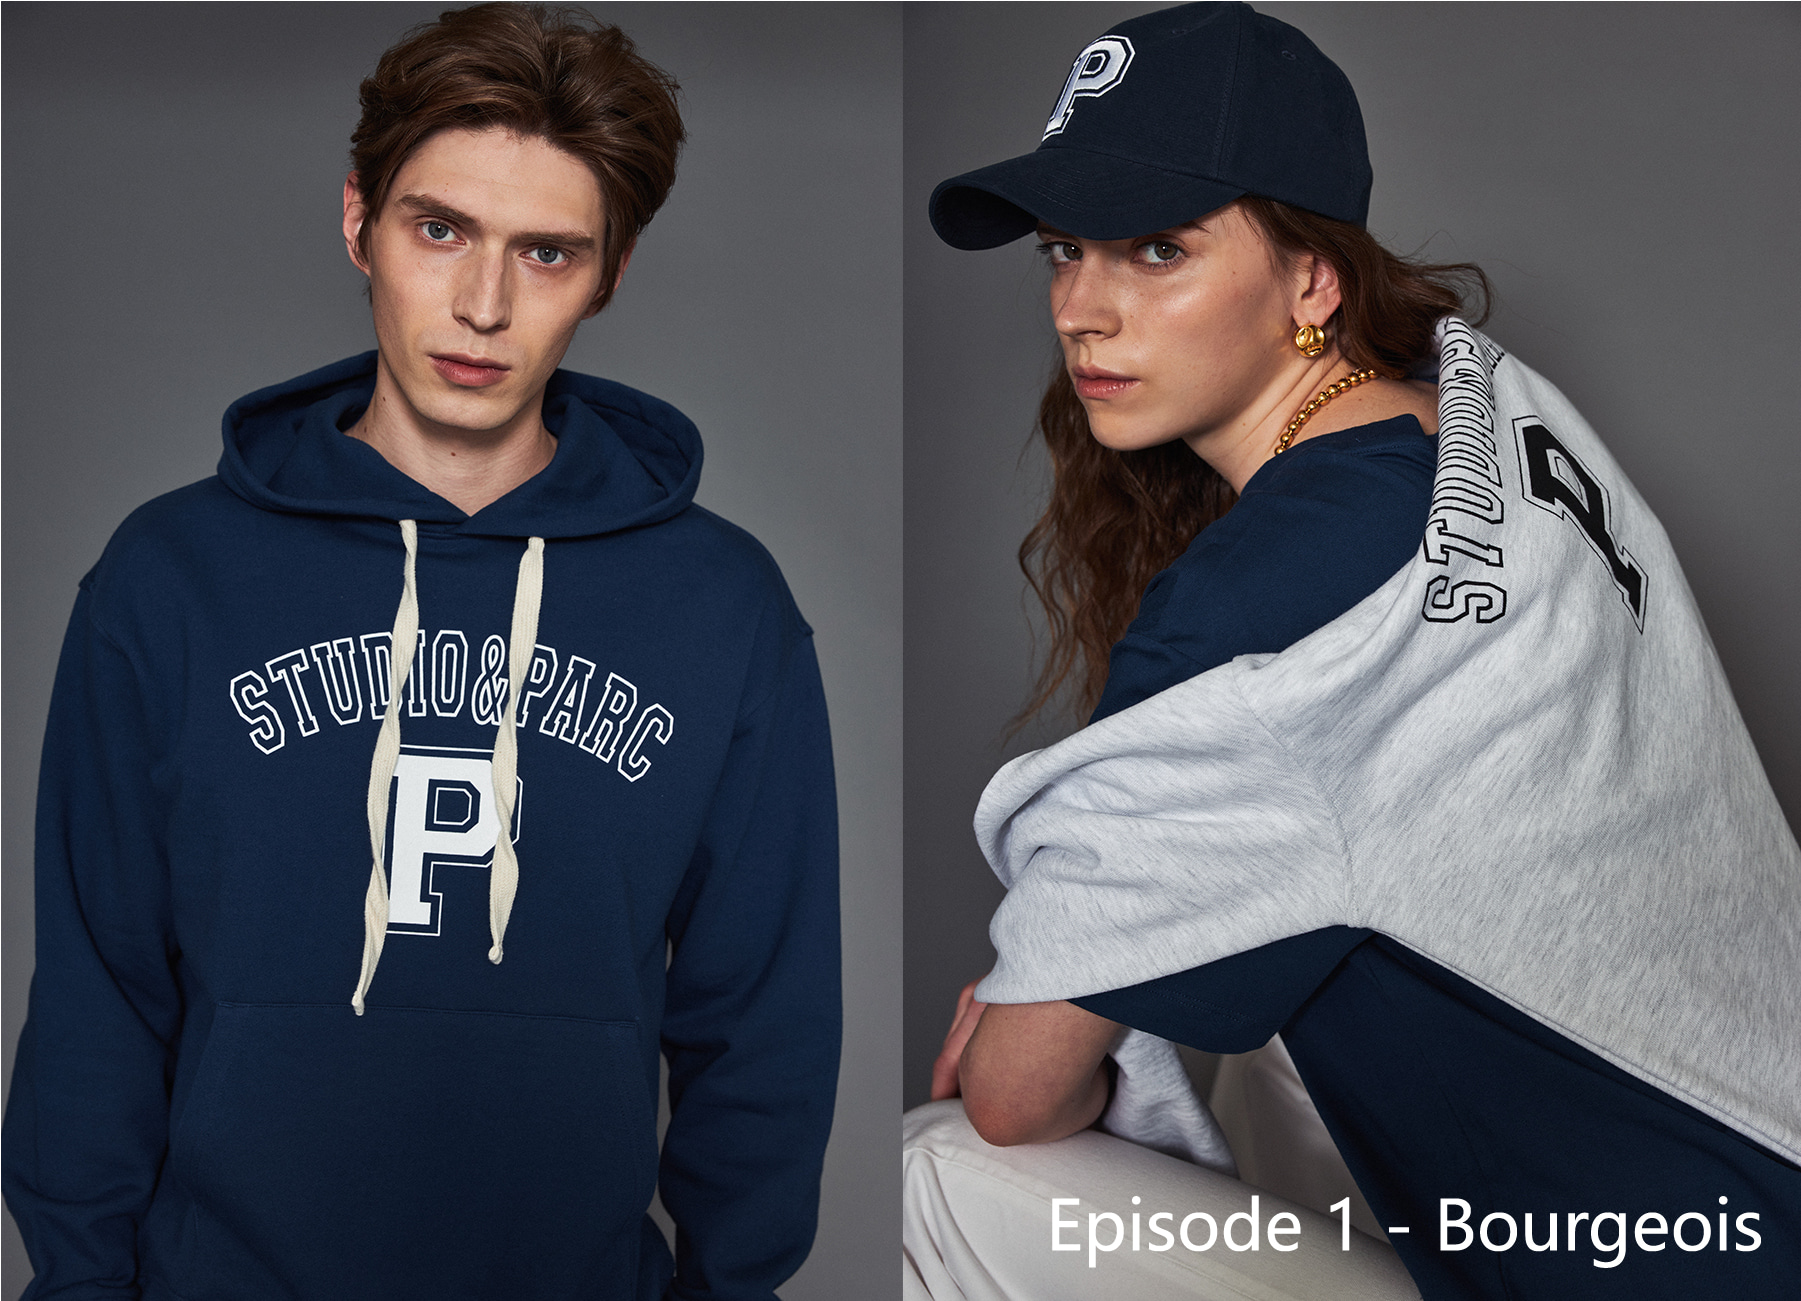 Episode 1 - Bourgeois